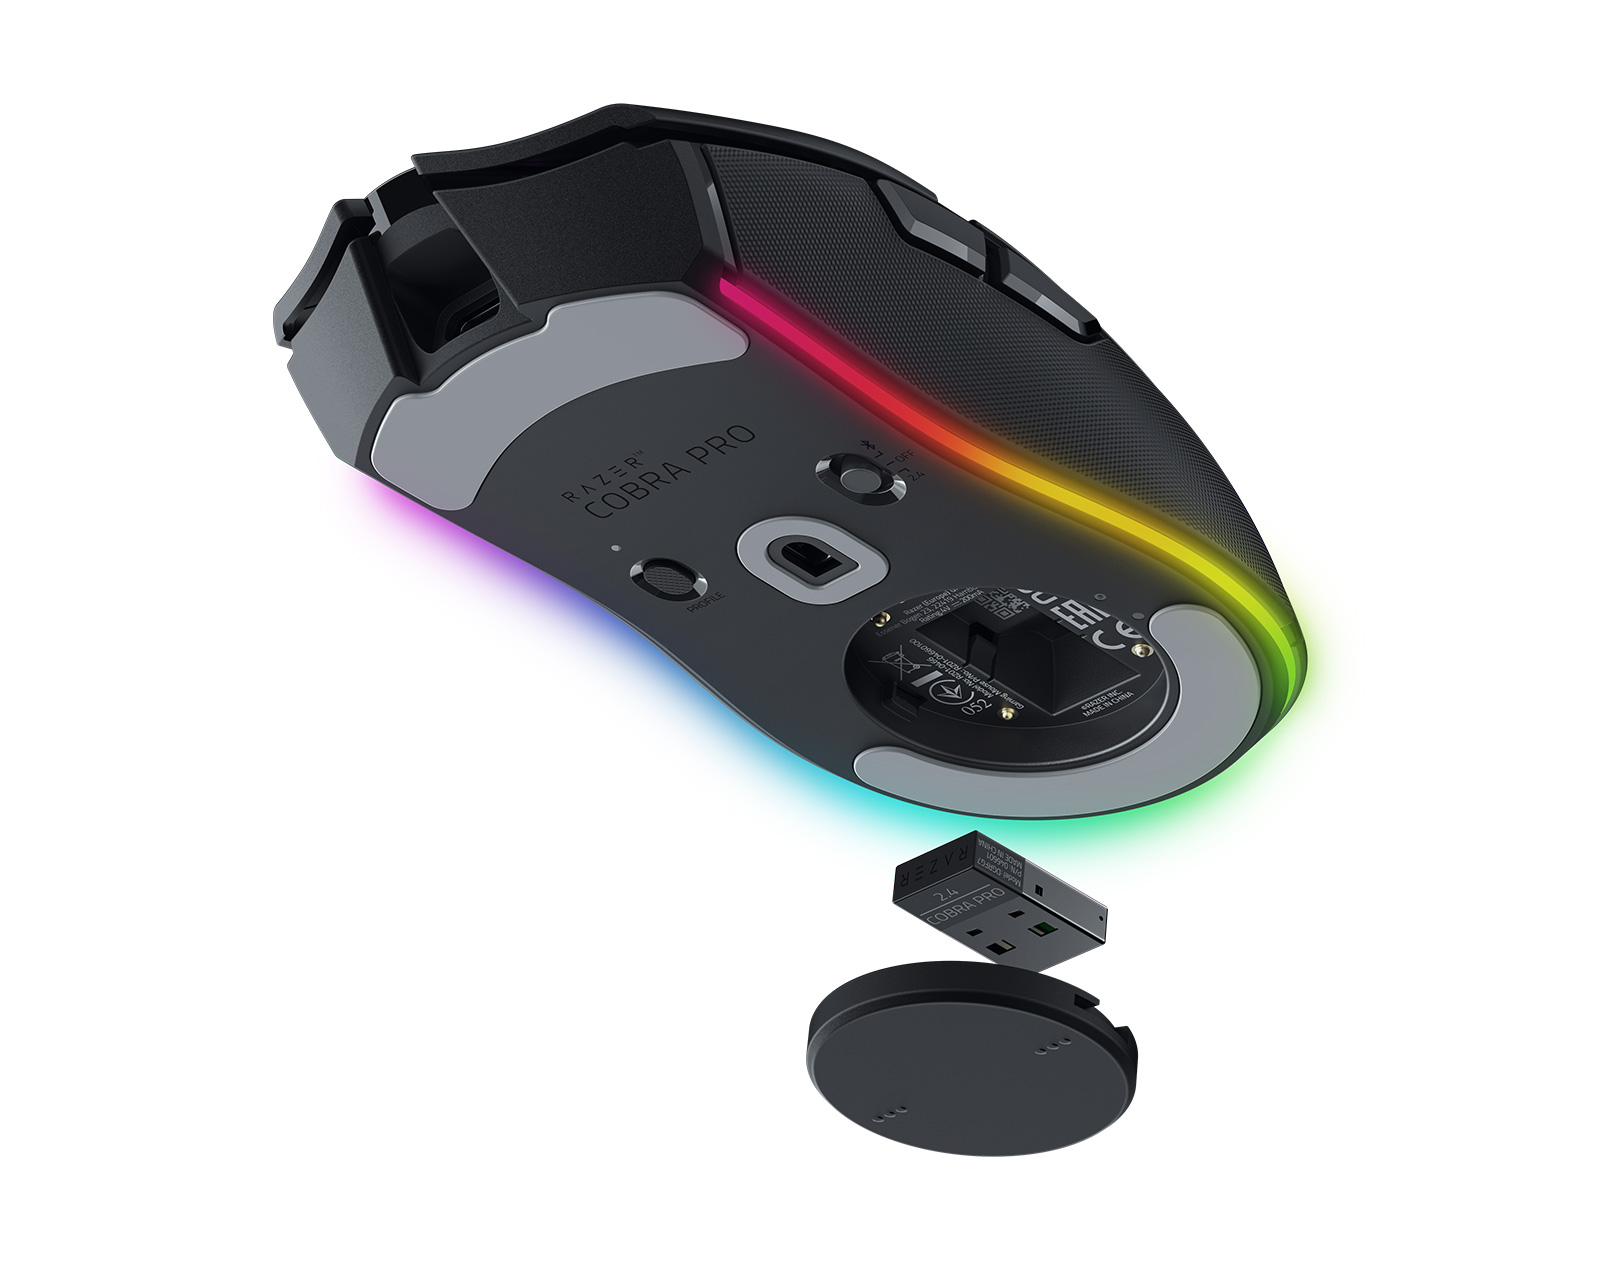 Cobra Pro ratón mano derecha RF Wireless + Bluetooth + USB Type-C Óptico  30000 DPI